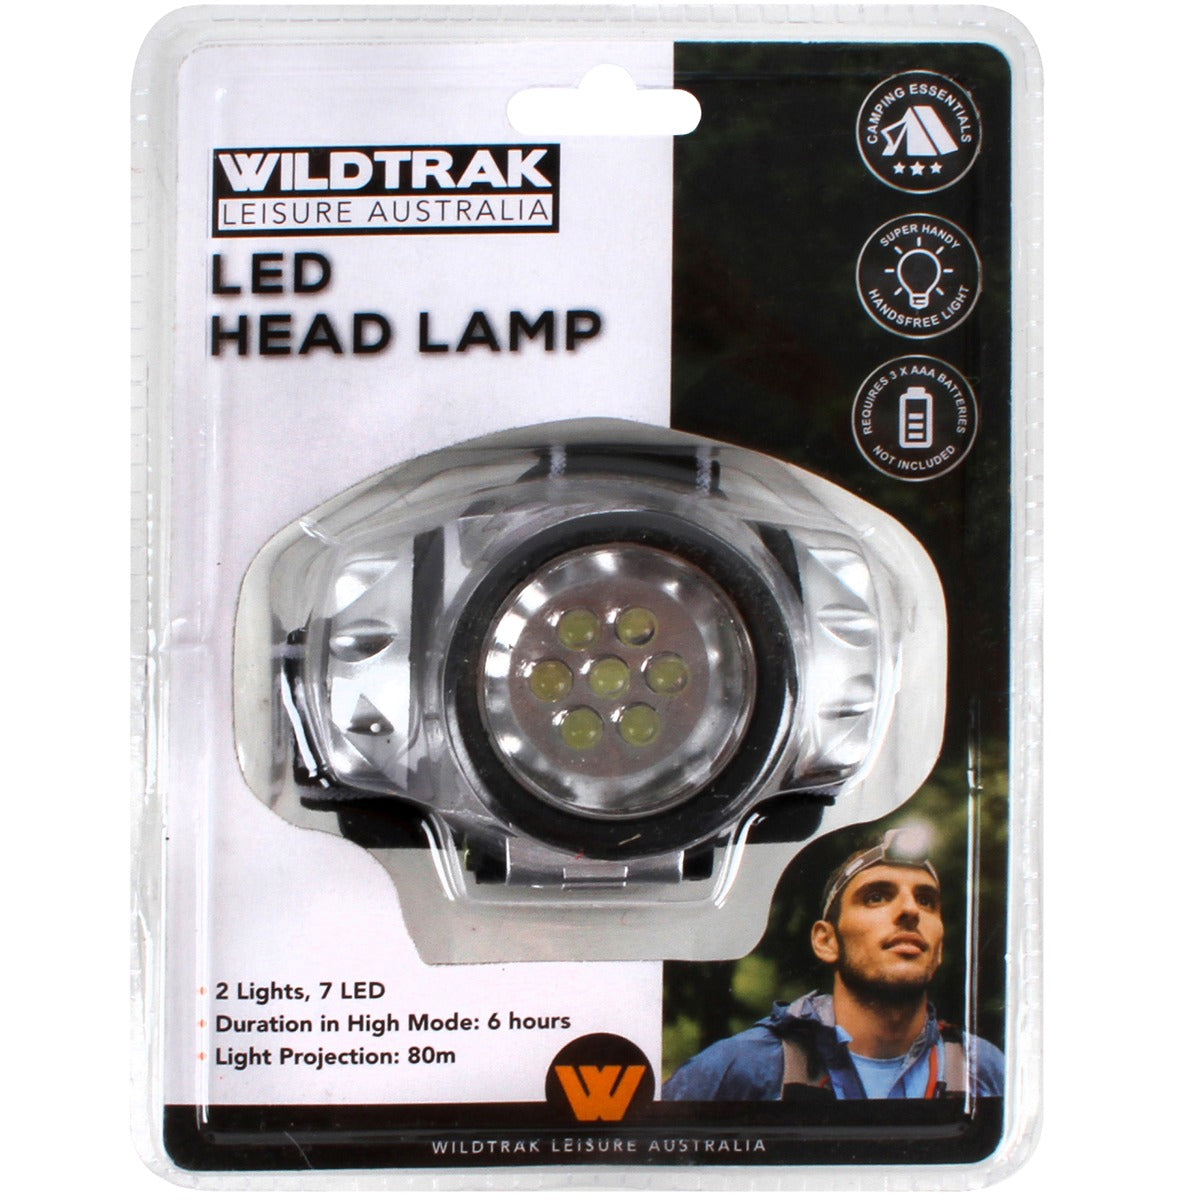 7 LED HEADLAMP WITH ADJUSTABLE STRAP